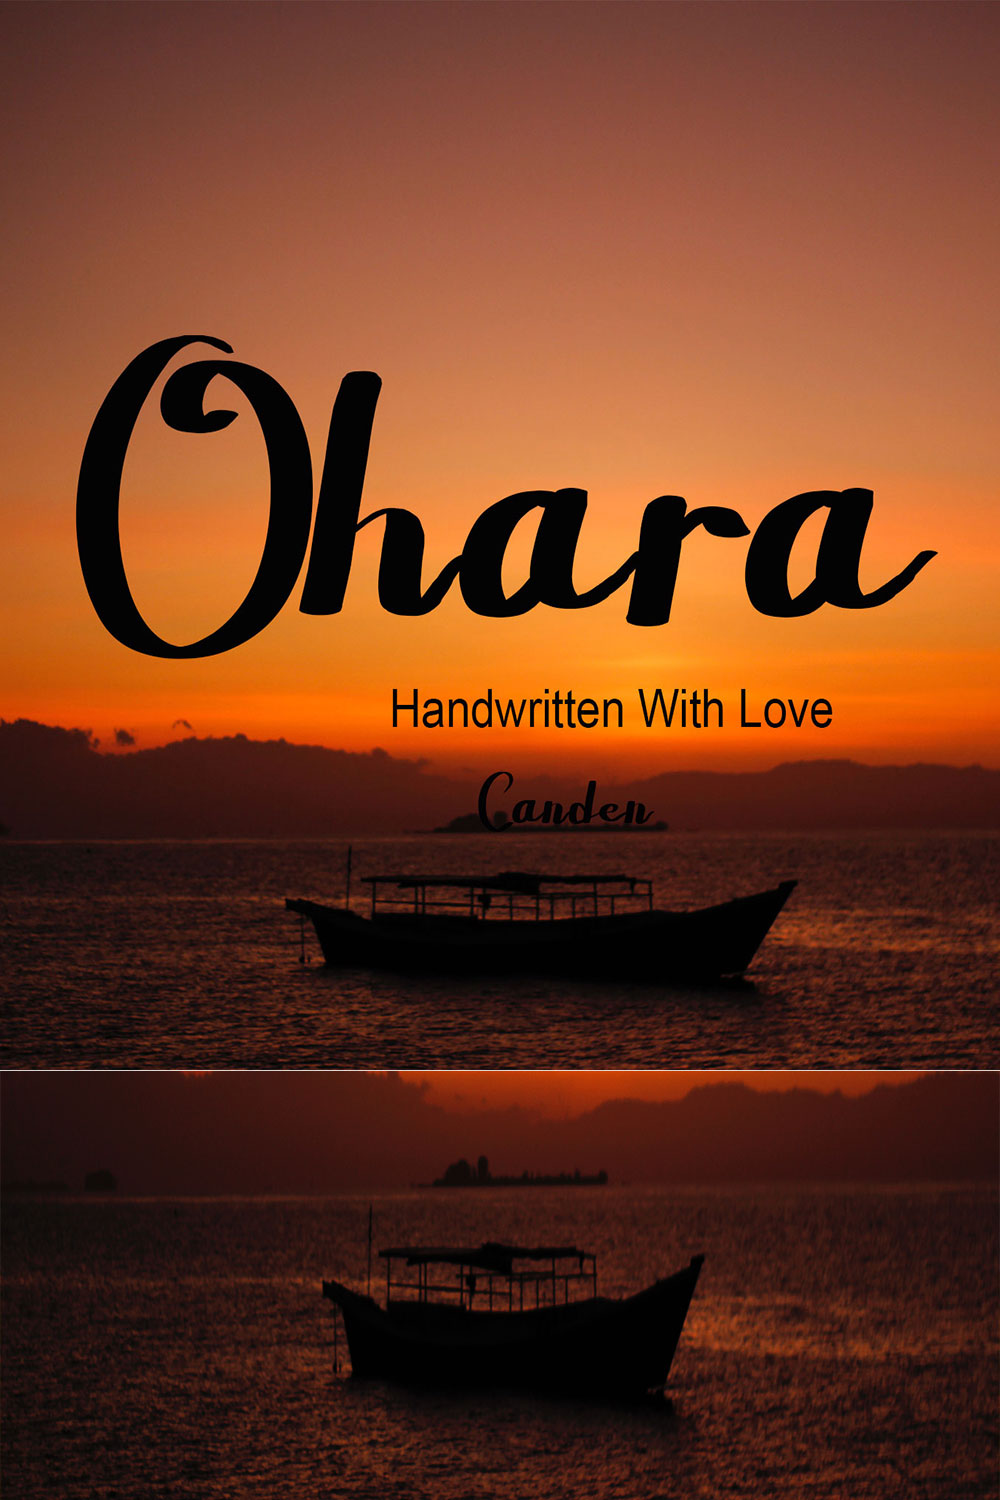 Ohara Handwritten Sans Serif Font Pinterest image.